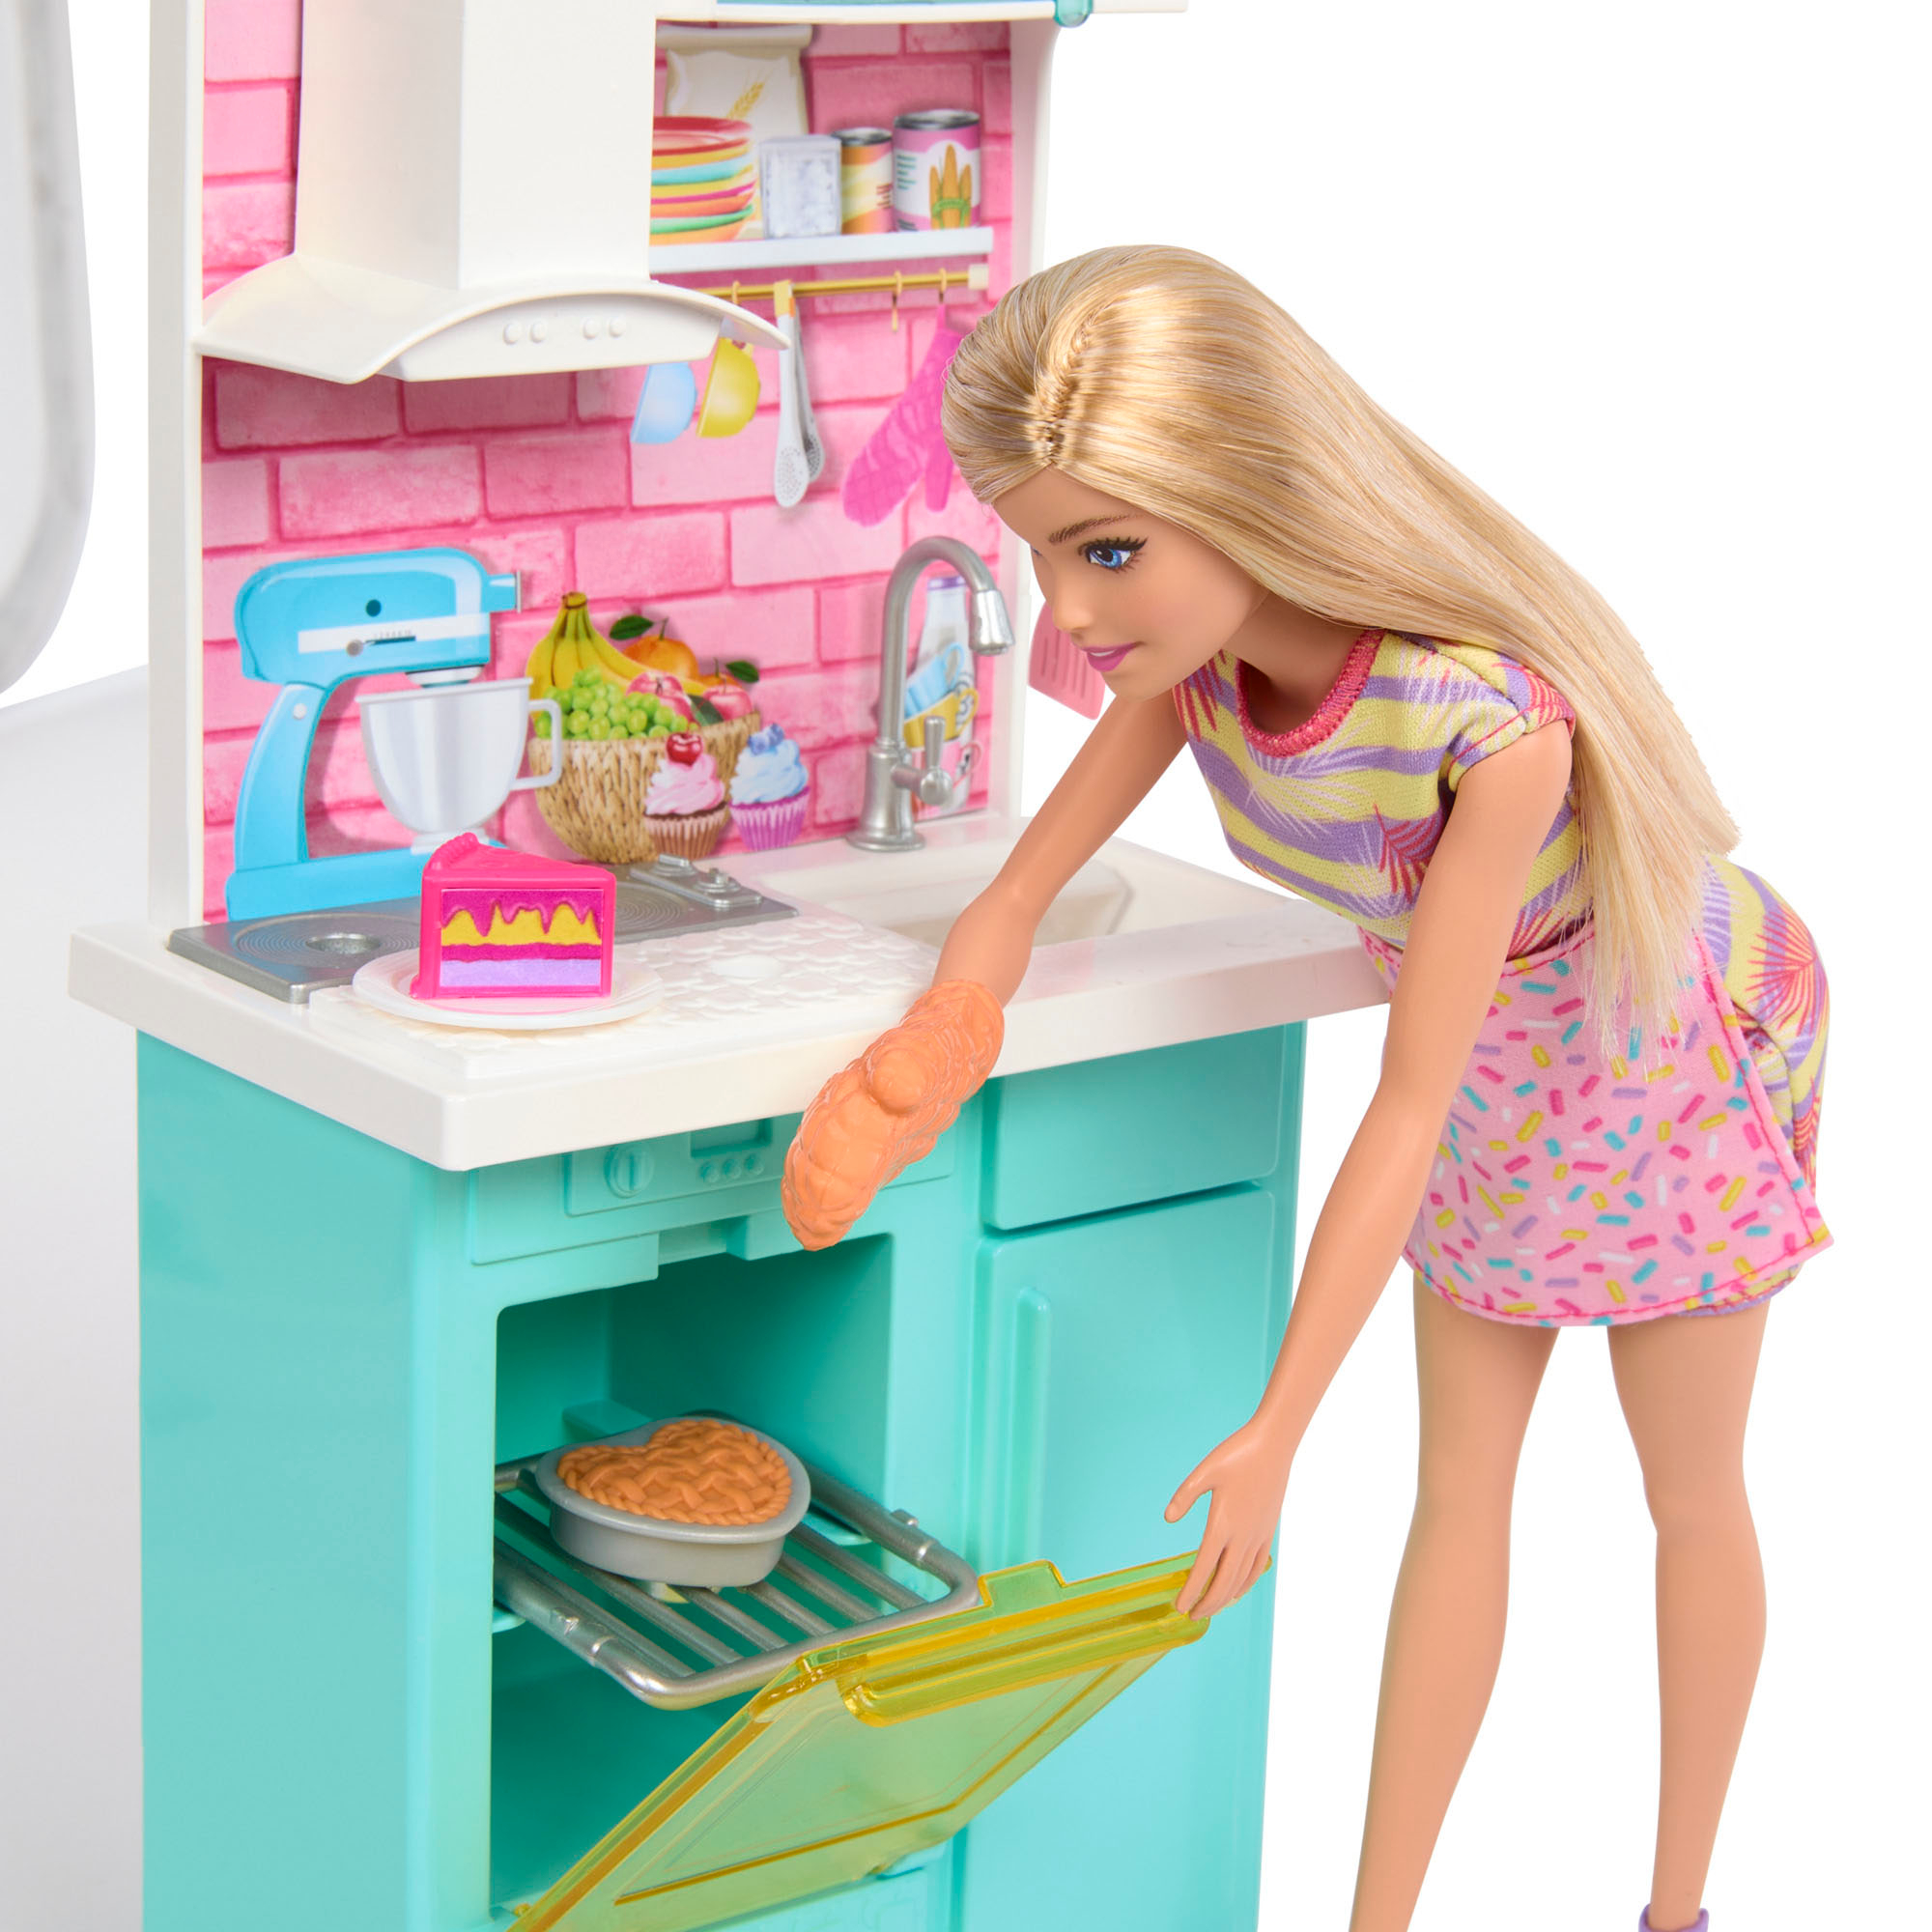 Barbie Celebration Fun Baking & Kitchen with Dolls Playset HJY94 - Best Buy